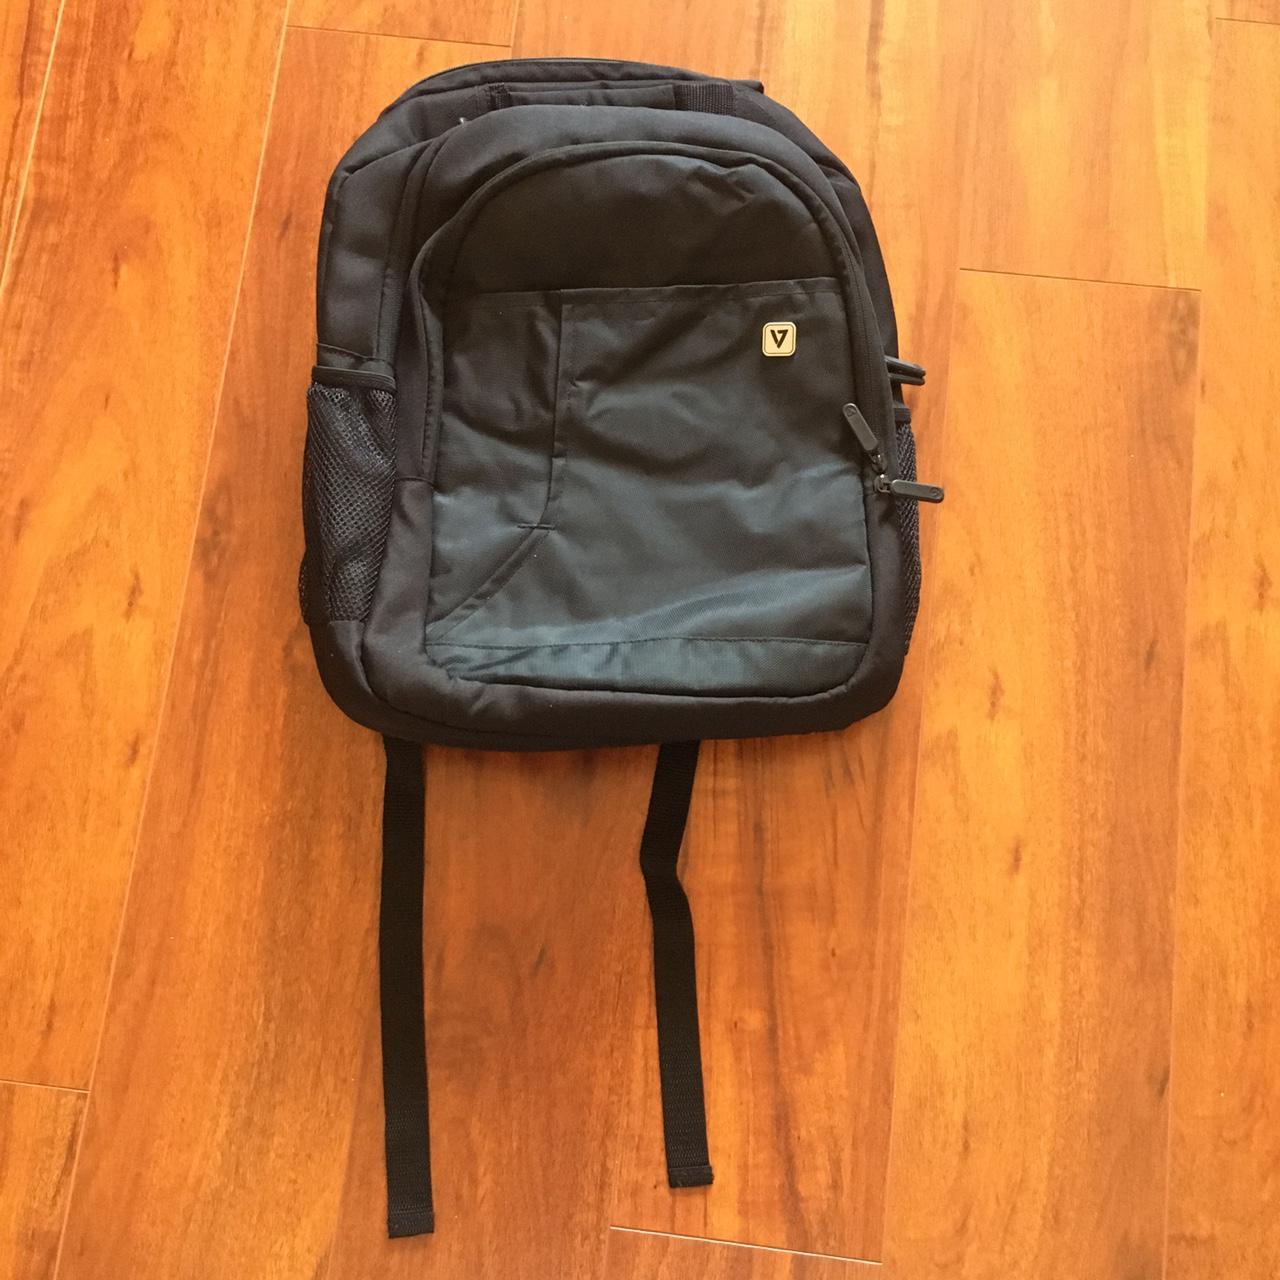 Product Image 1 - black ingram micro laptop backpack
adjustable